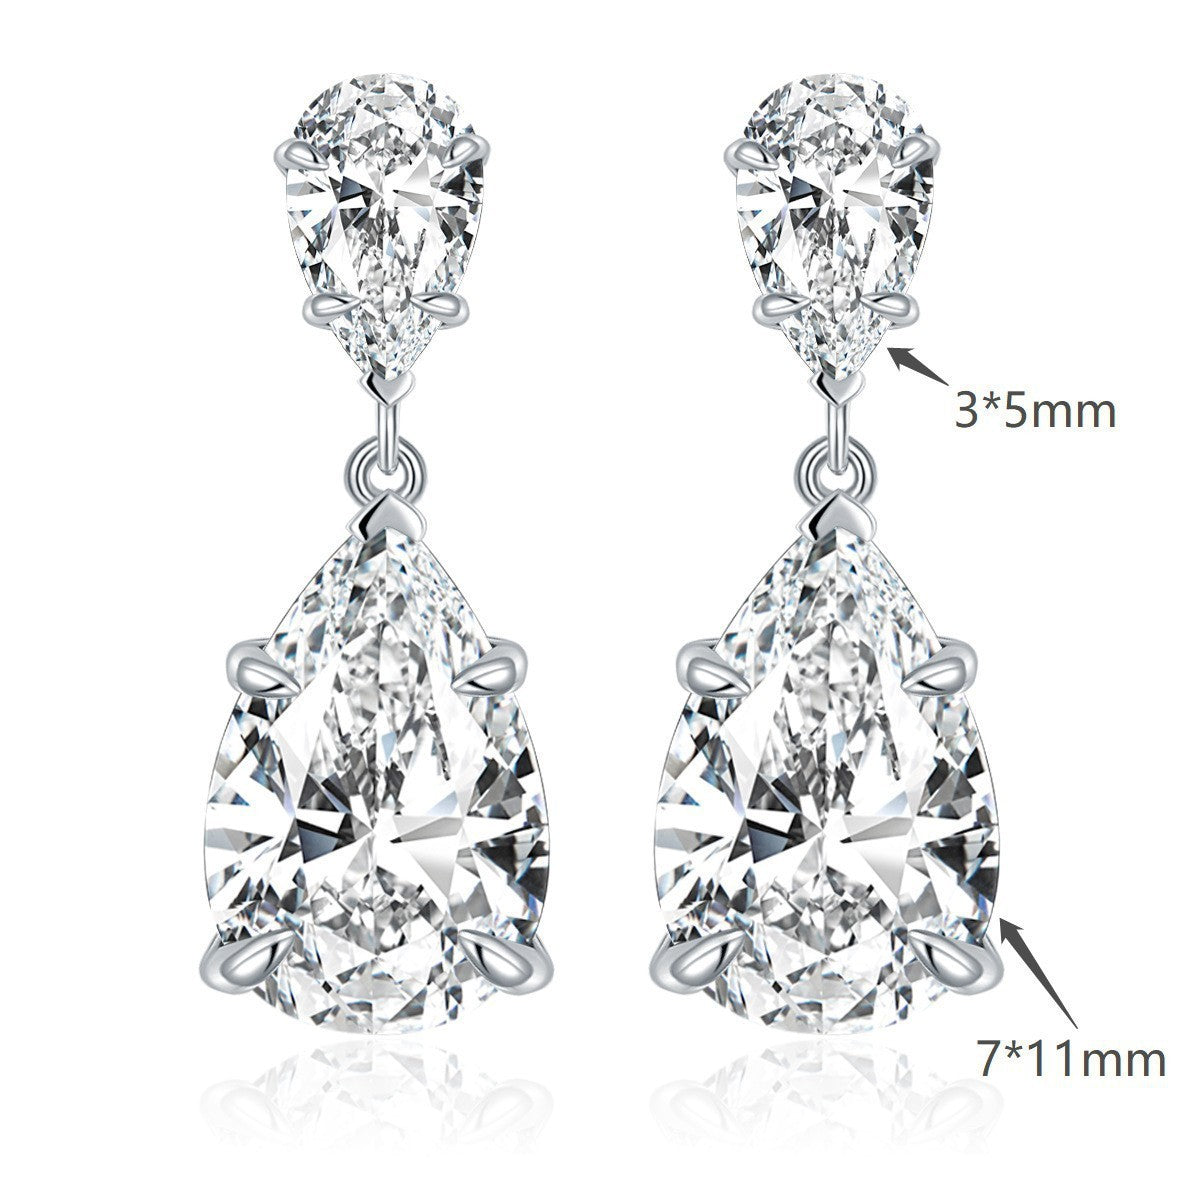 New 7*11mm Pear-shaped Full Moissanite S925 Silver Plated 18k Gold Stud Earrings